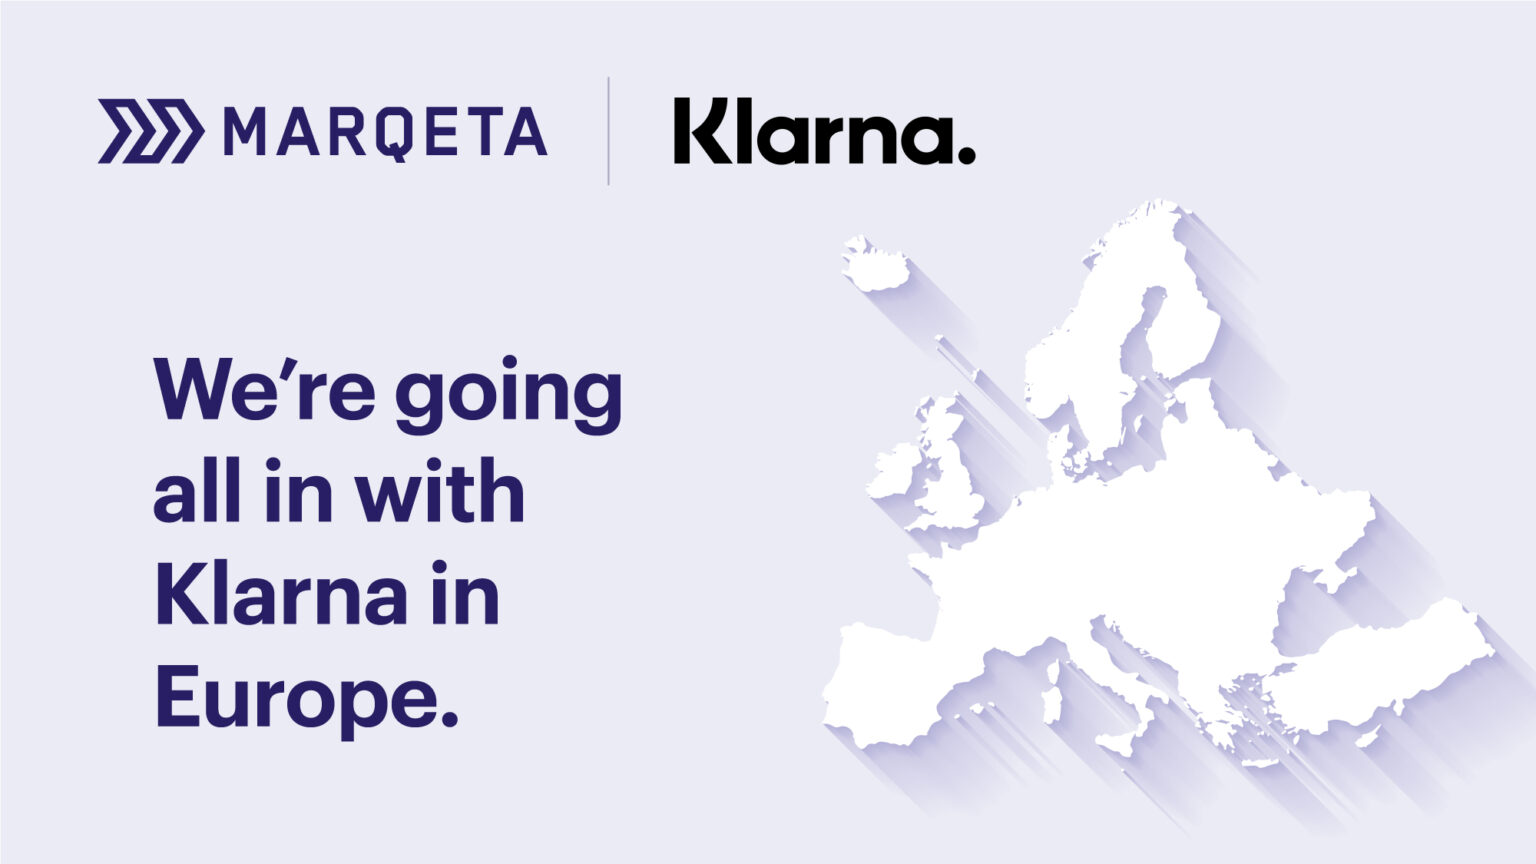 Marqeta and Klarna partner in Europe